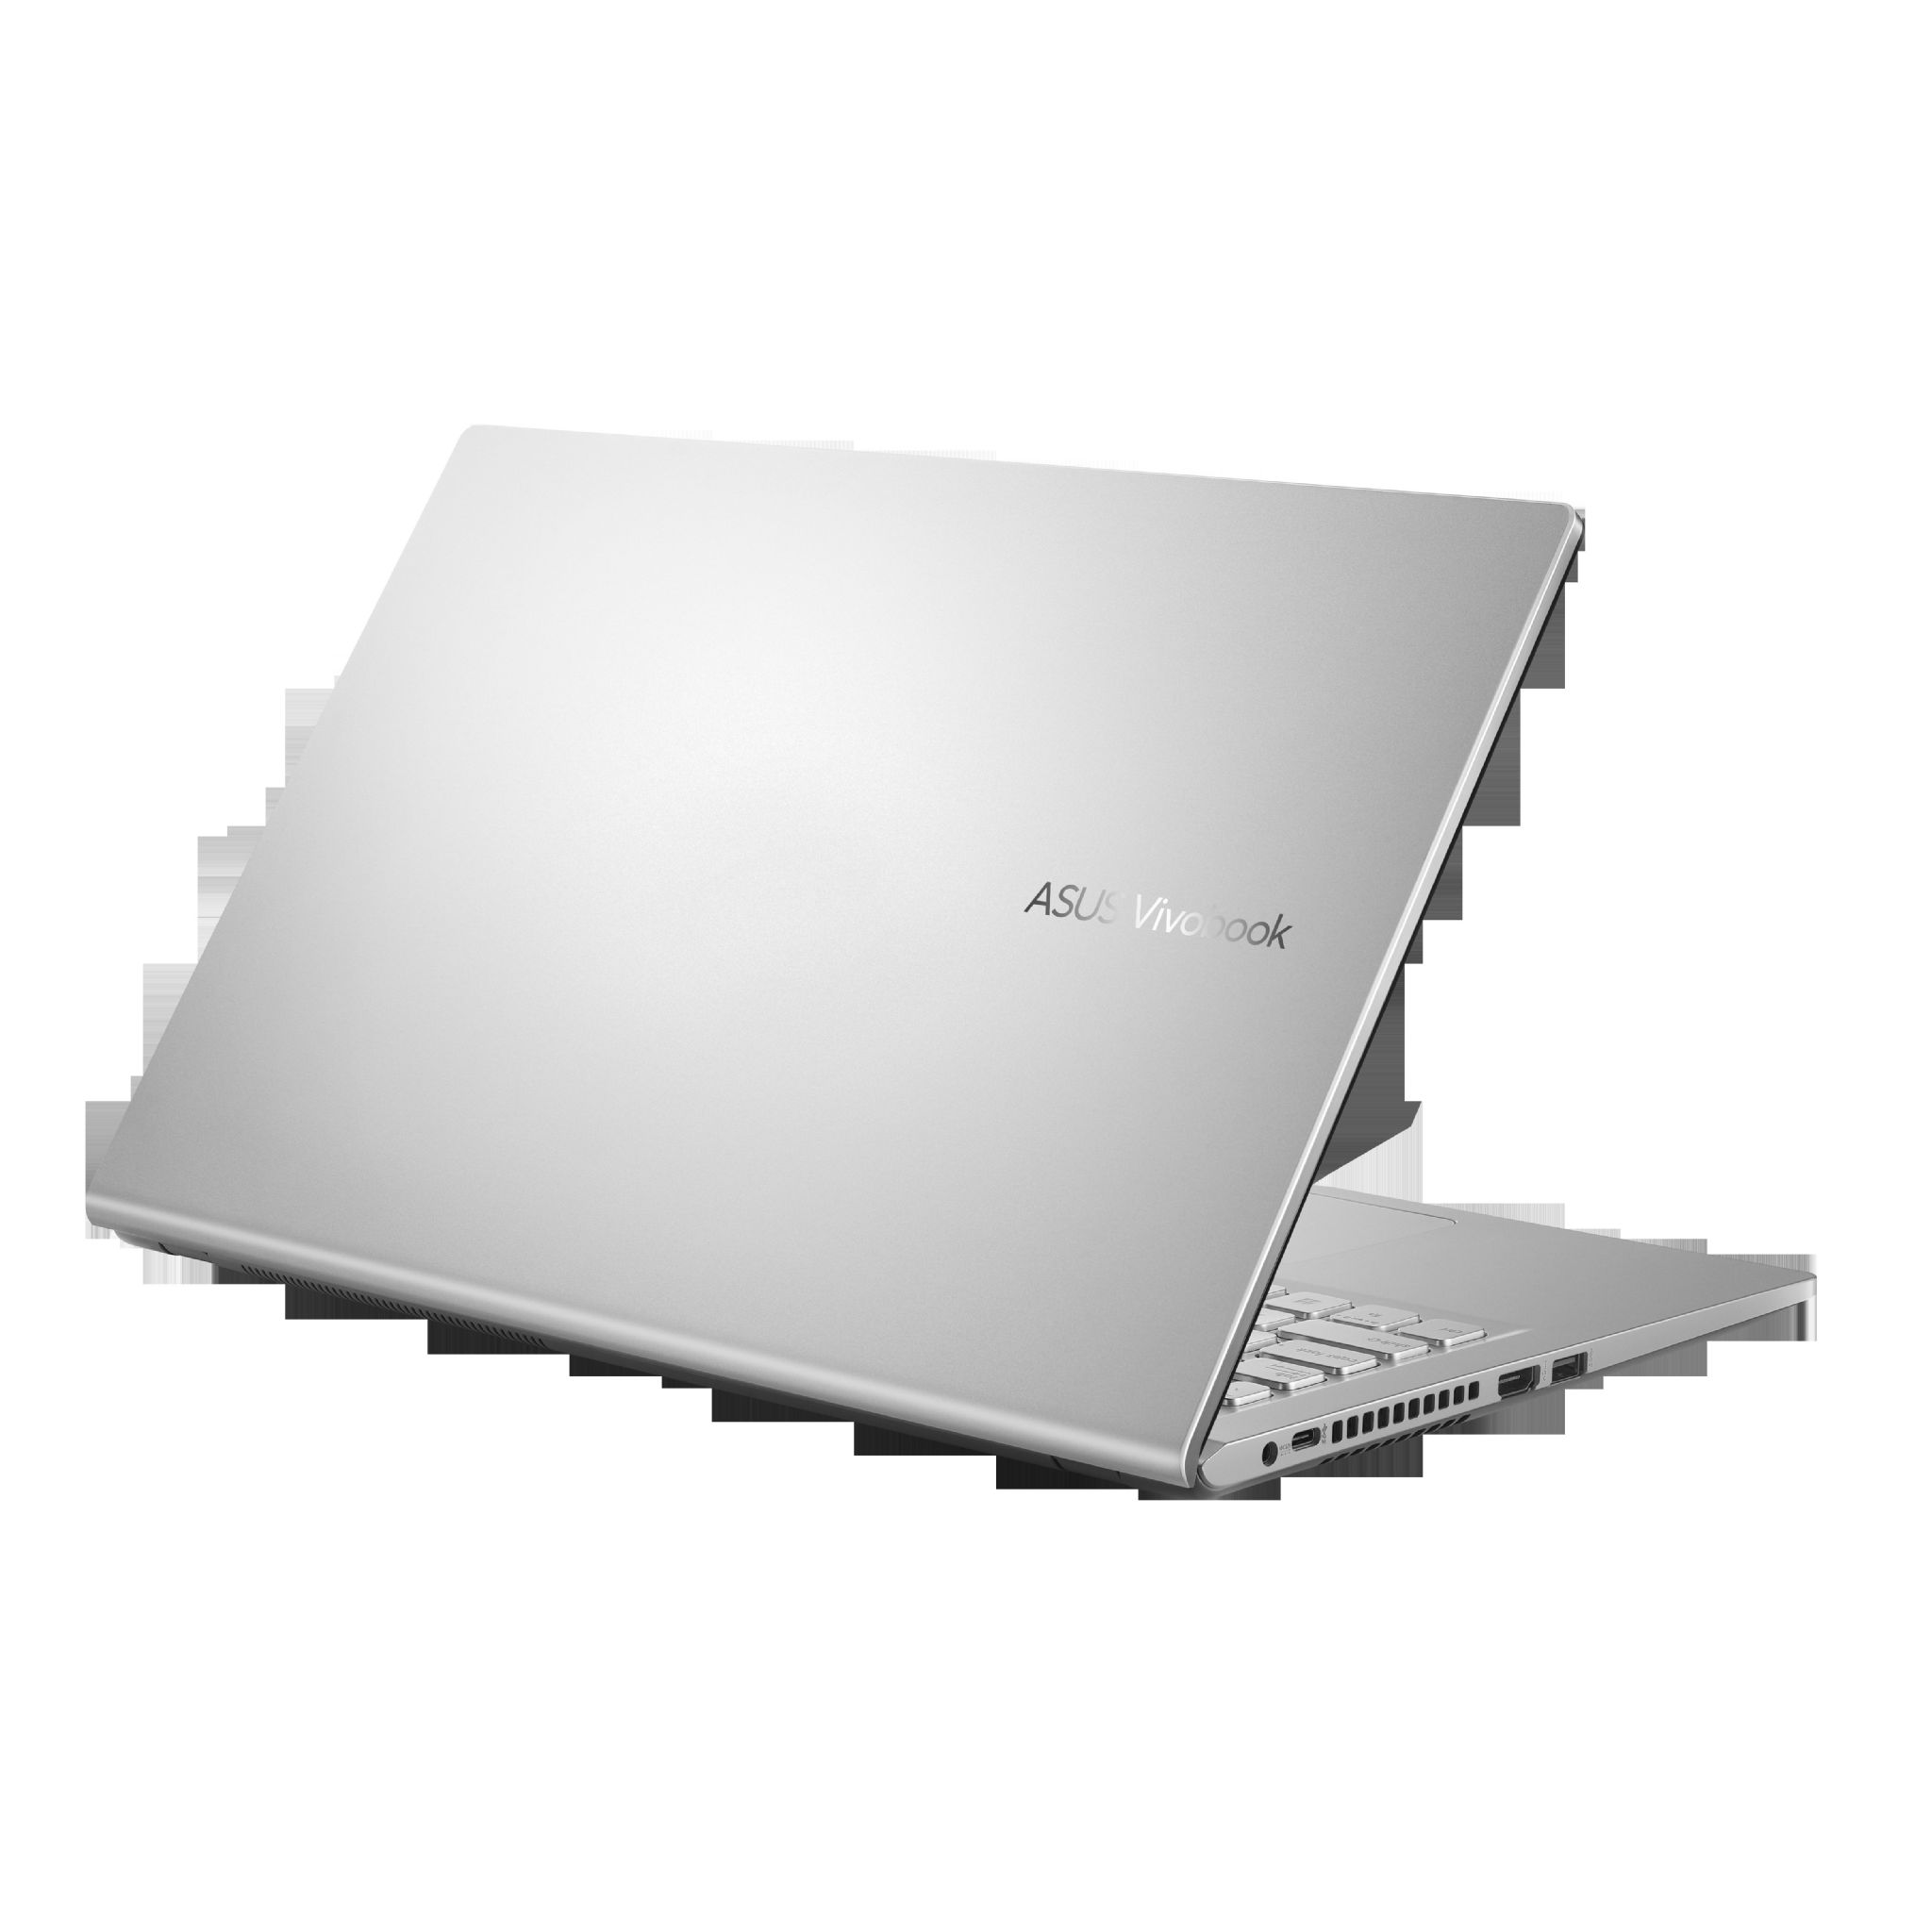 GB GB Silber Zoll SSD, Intel®, 15,59 8 Notebook mit Display, ASUS 256 RAM, 90NB0TY6-M03NT0,